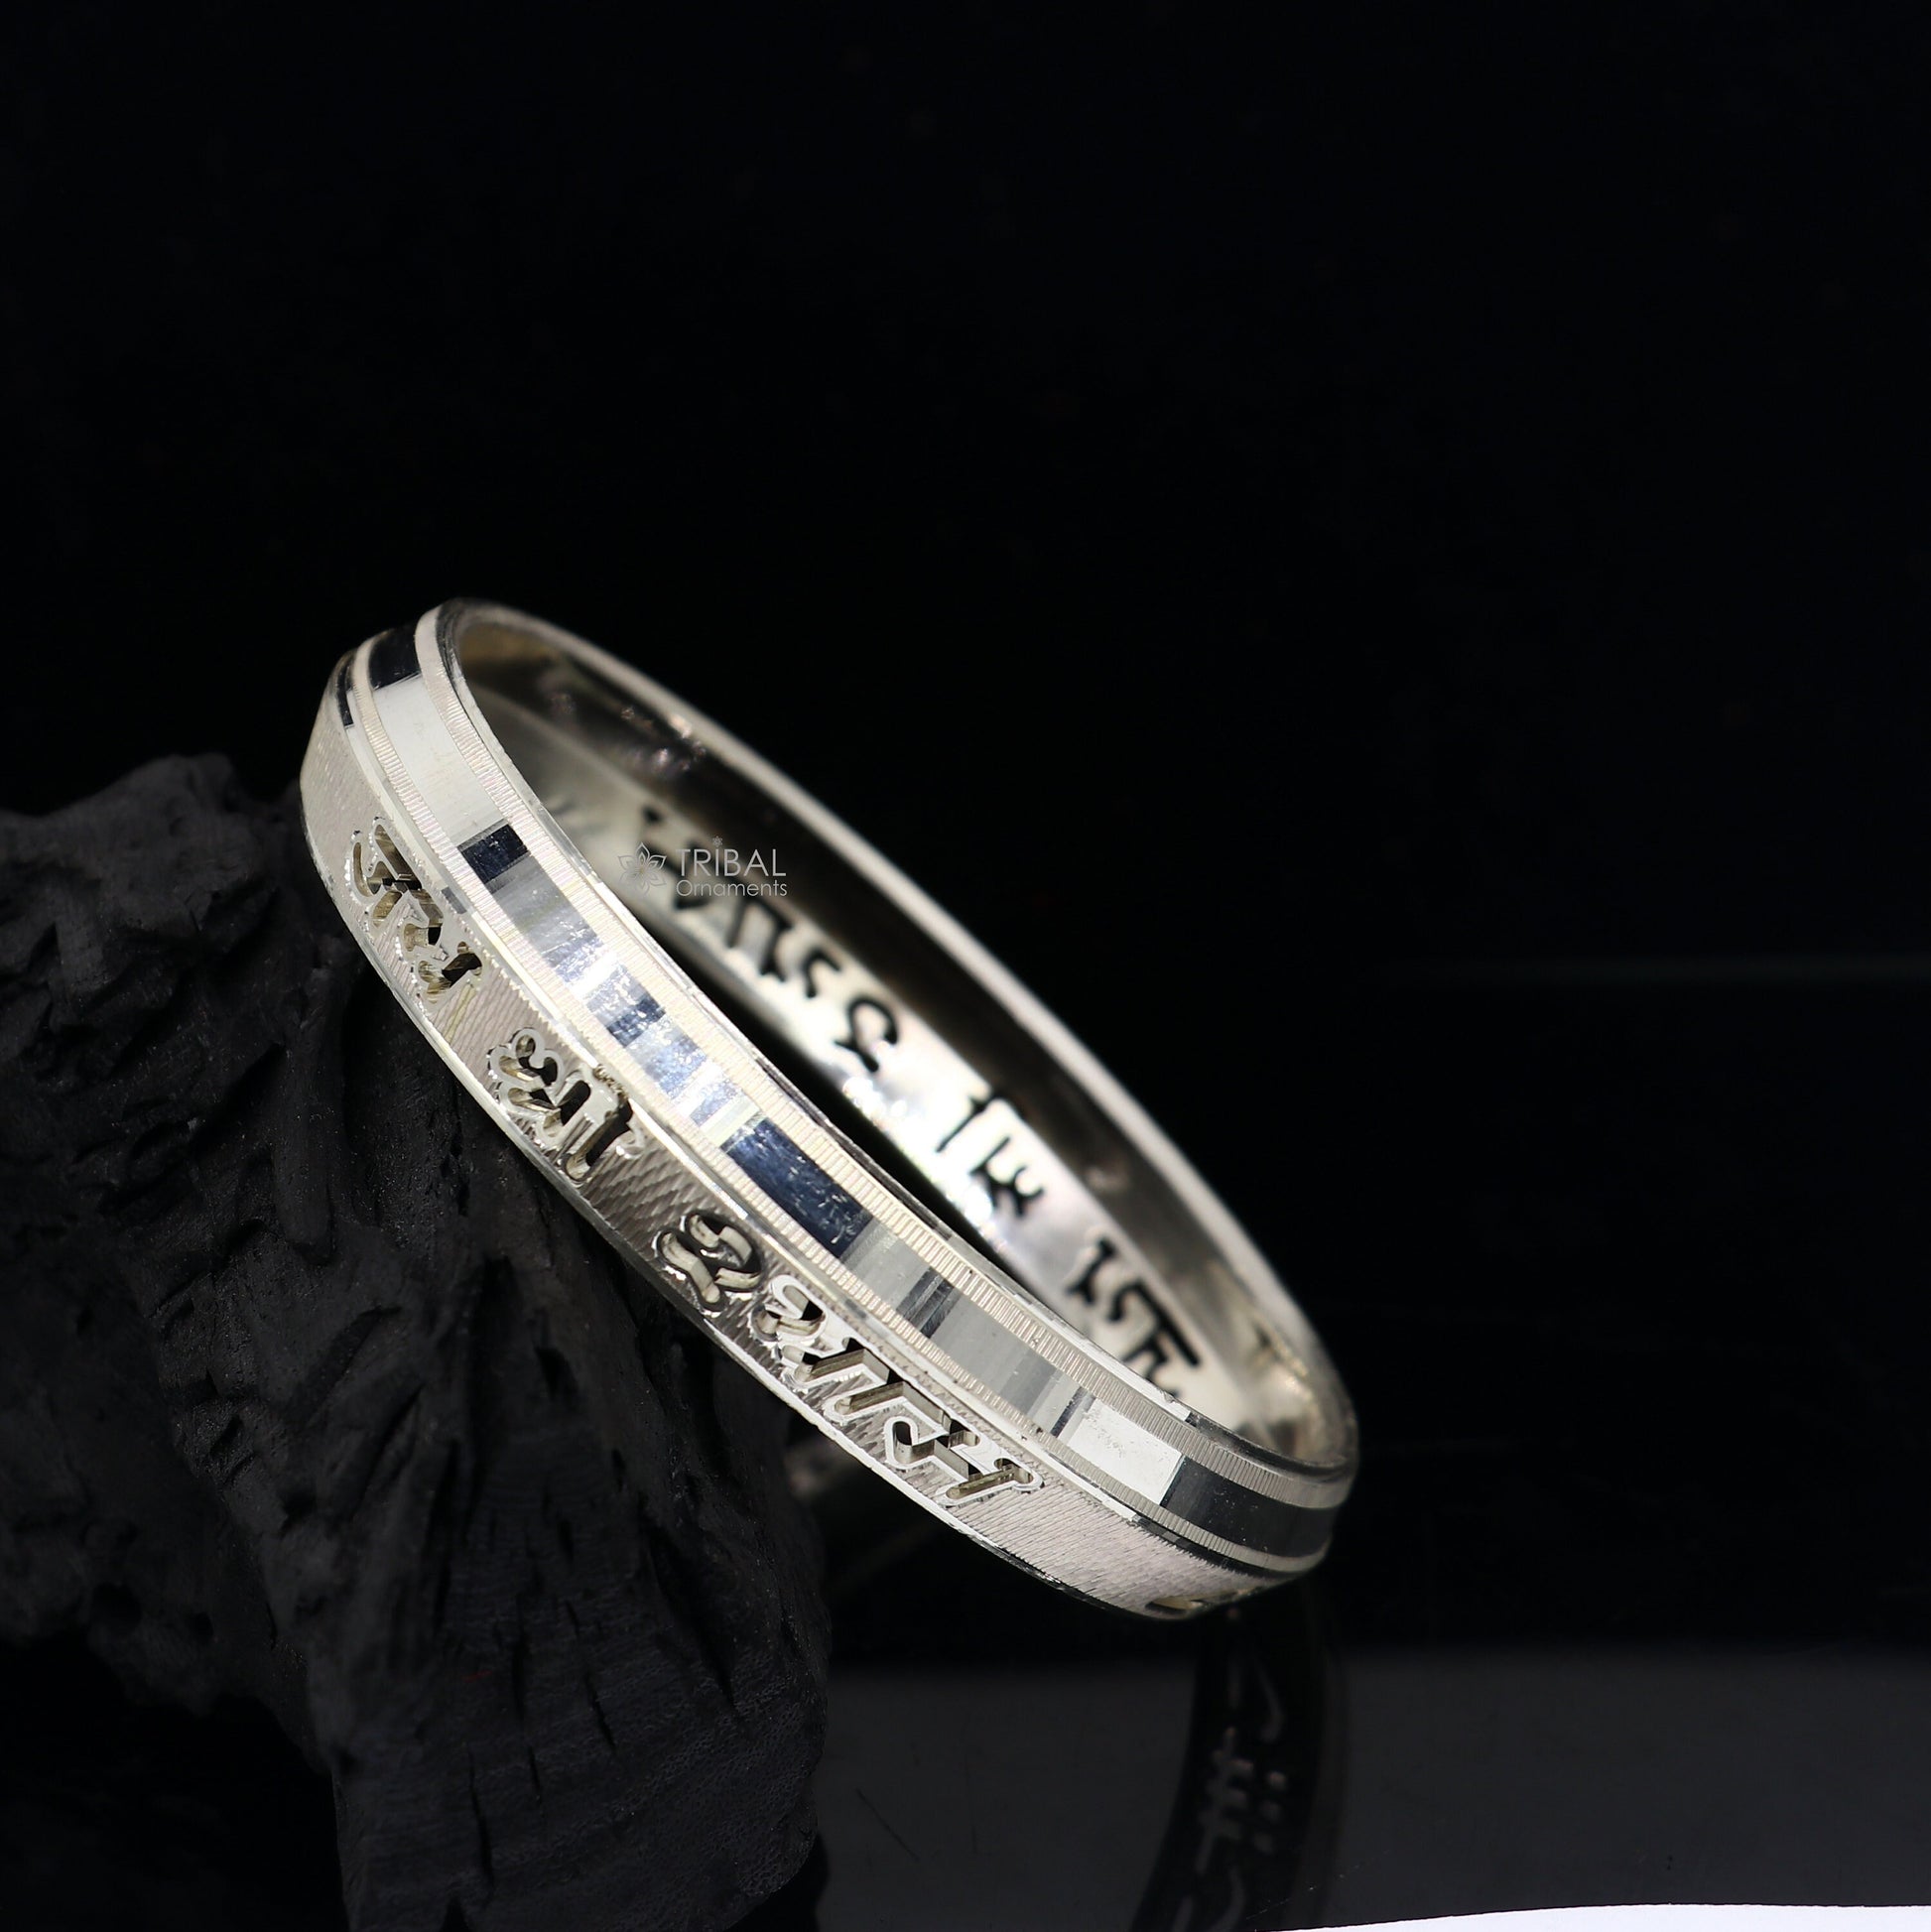 925 sterling silver handmade solid kada bracelet for men's , amazing "Jai Shri Shyam" mantra kada men's daily use luxury kada jewelry nsk777 - TRIBAL ORNAMENTS